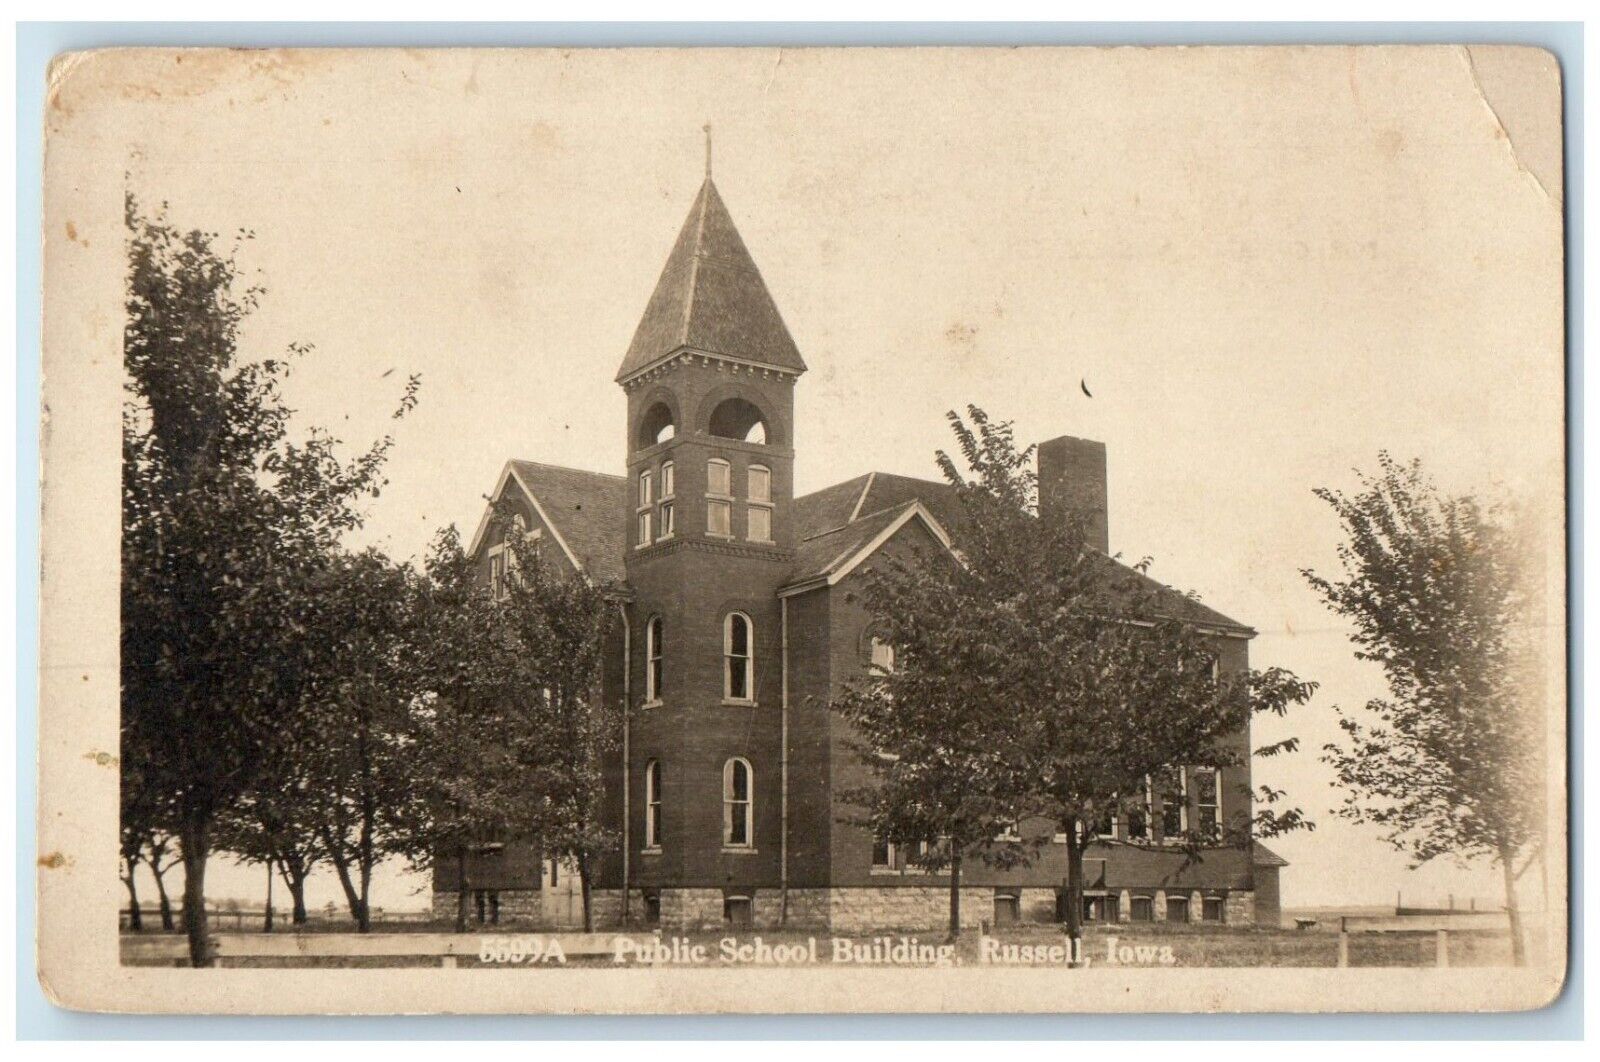 c1940's Public School Building Russell Iowa IA RPPC Photo Vintage Postcard